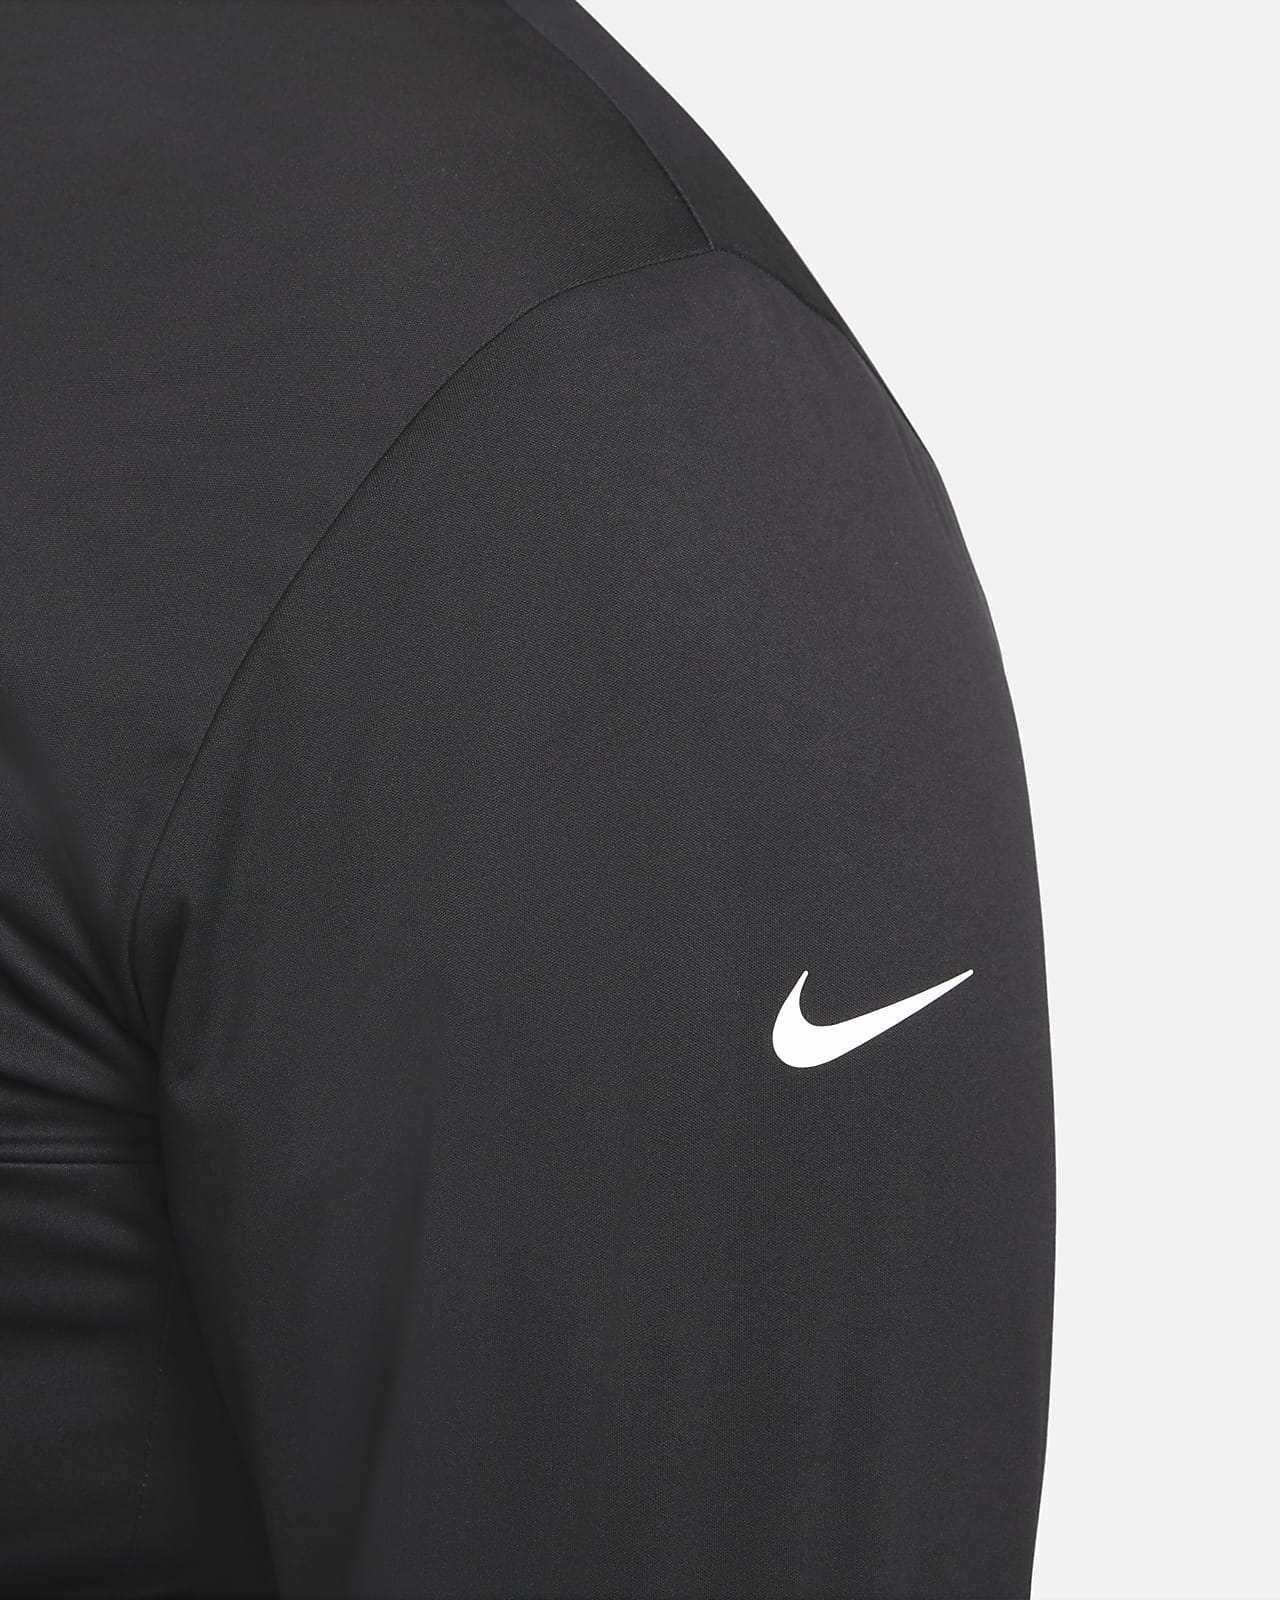 Nike Storm-FIT Victory Men's Full-Zip Golf Jacket. Nike CH